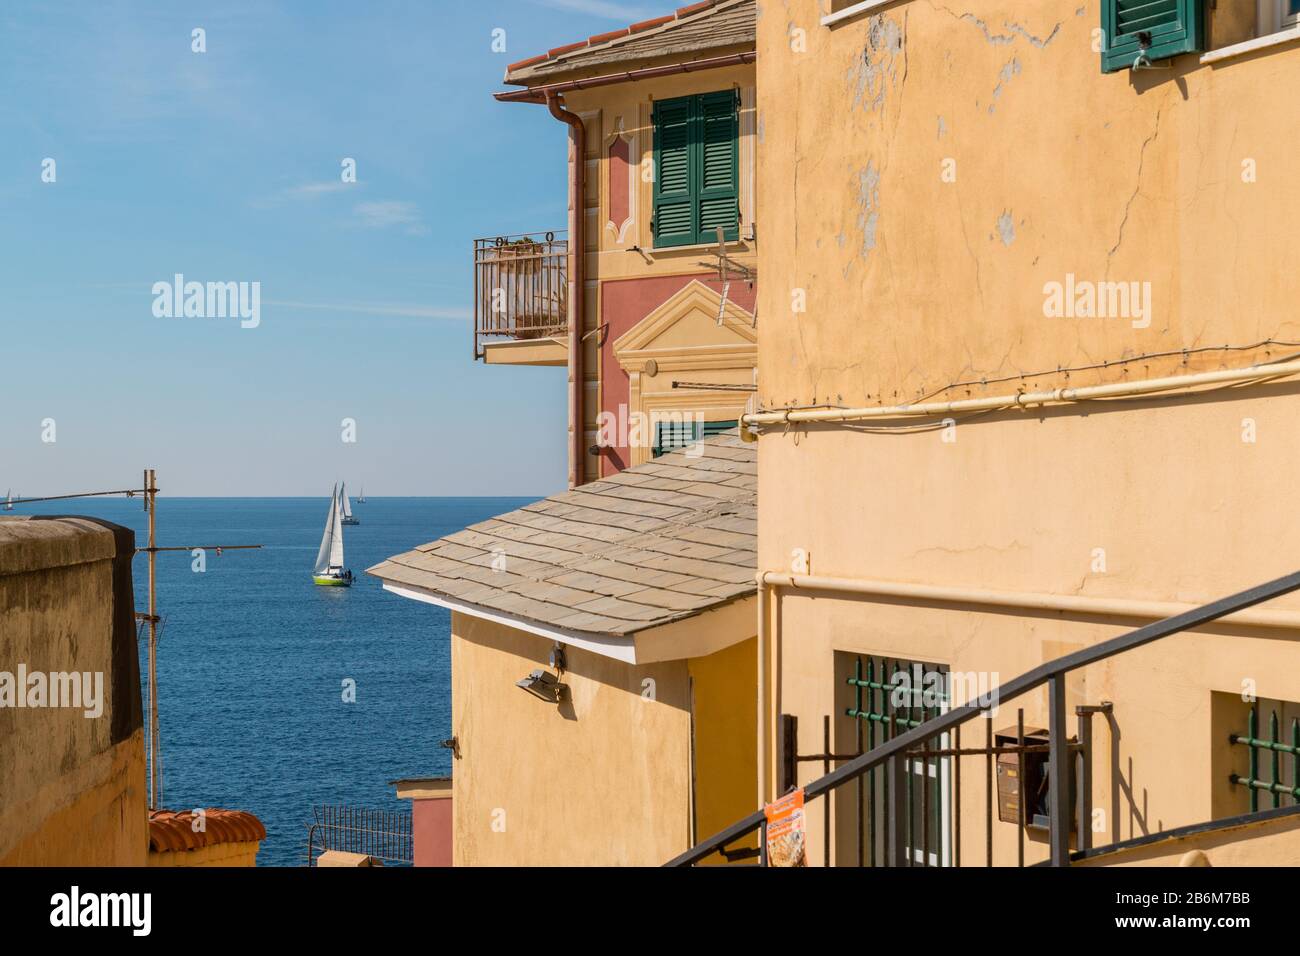 Glimpse of Genoa Boccadasse, Liguria, Ligurian Sea, Italy Stock Photo